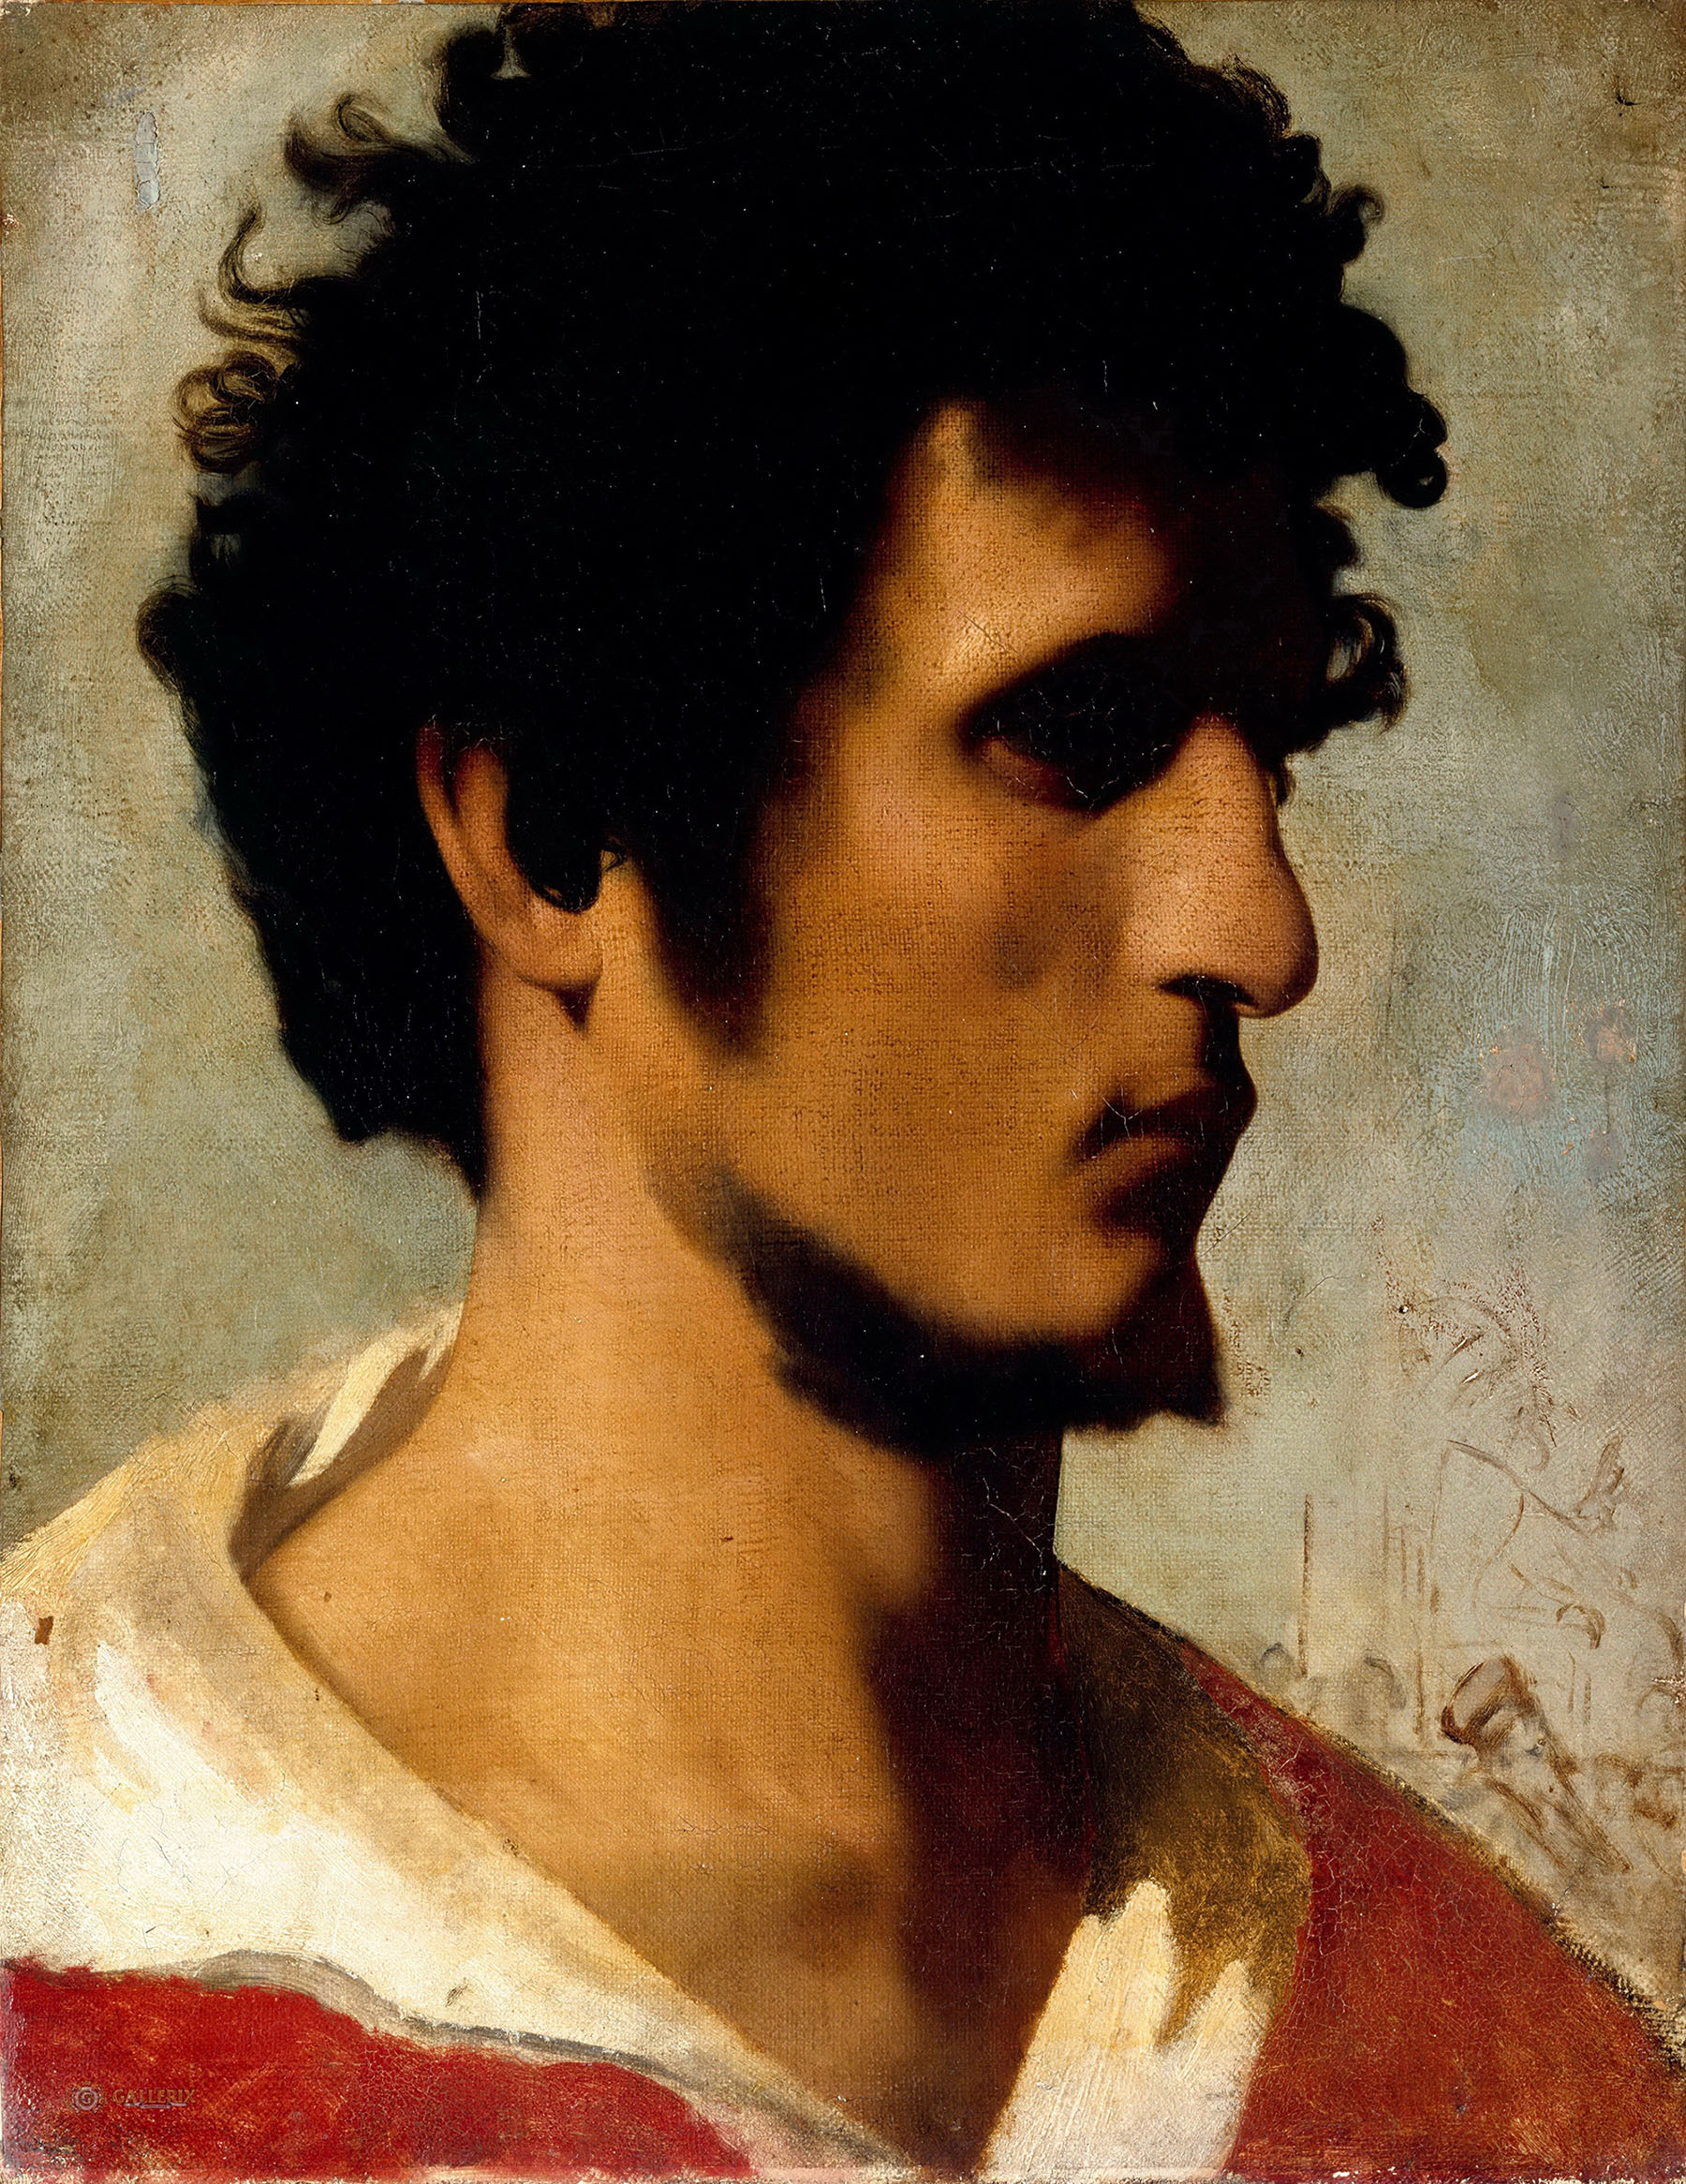 Жан-леон Жером. "Голова римского крестьянина". 1844. Музей Маньен, Дижон.